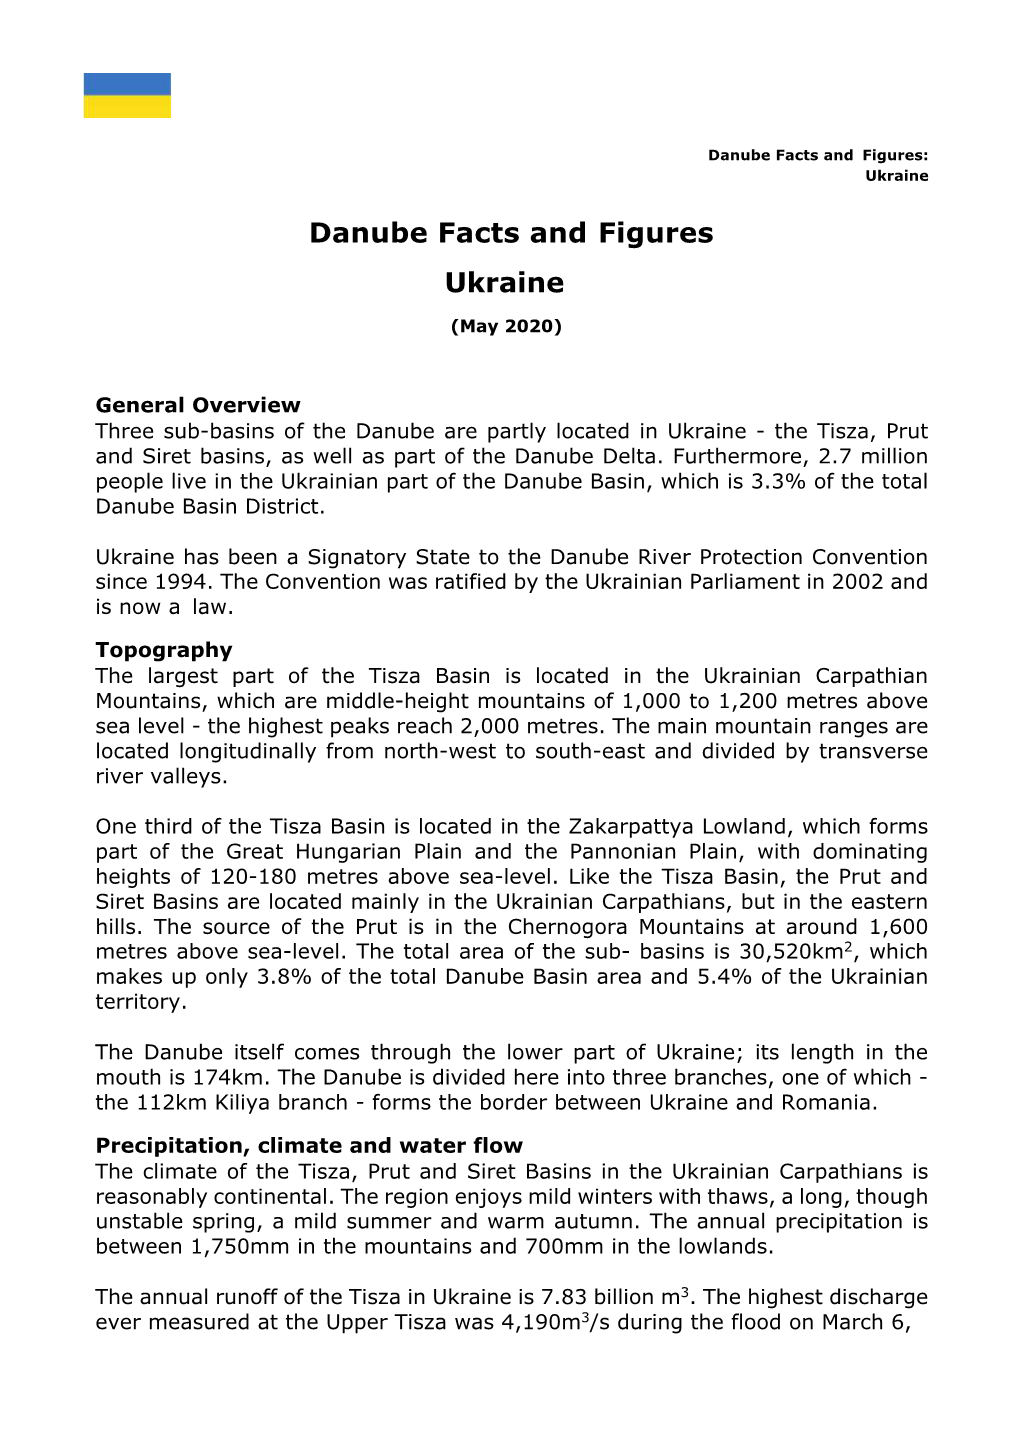 Danube Facts and Figures Ukraine